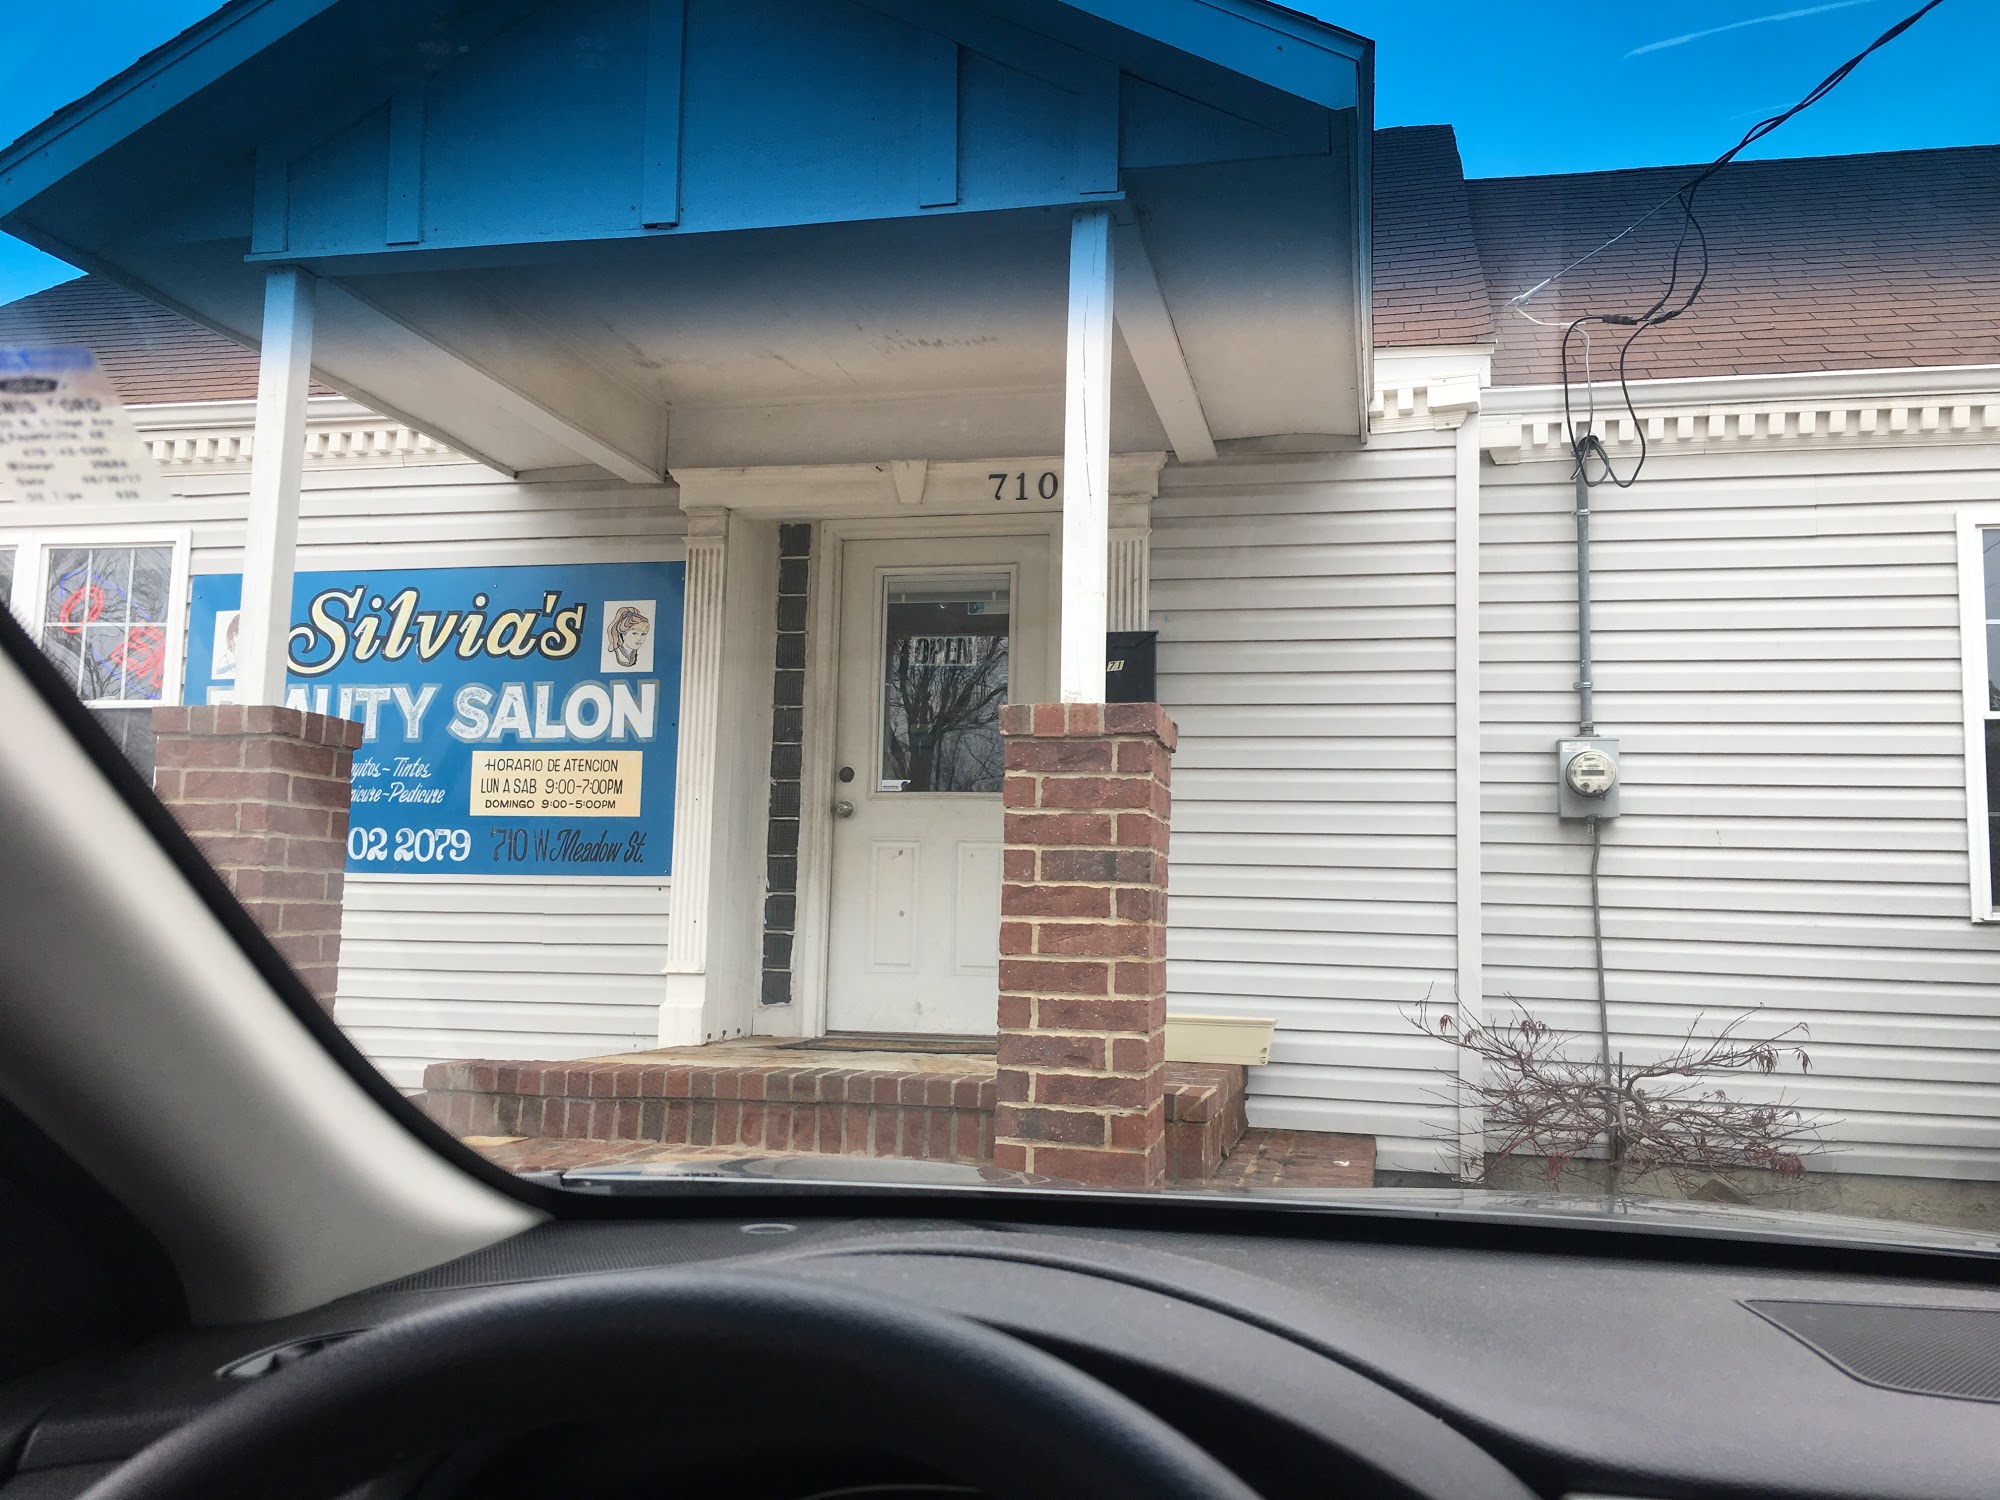 Silvia's Beauty Salon